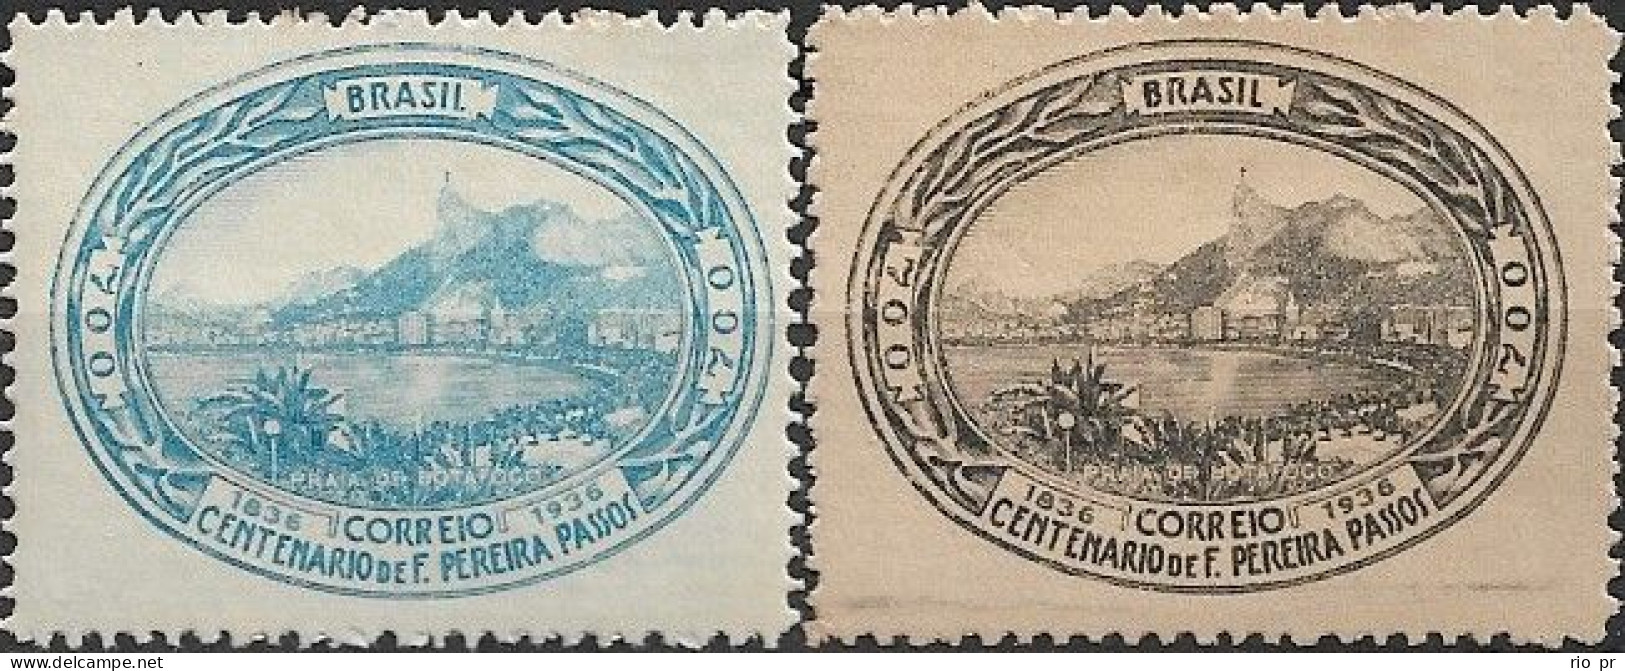 BRAZIL - COMPLETE SET BIRTH CENTENARY OF PEREIRA PASSOS (1836-1913), BRAZILIAN CIVIL ENGINEER 1937 - MH - Unused Stamps